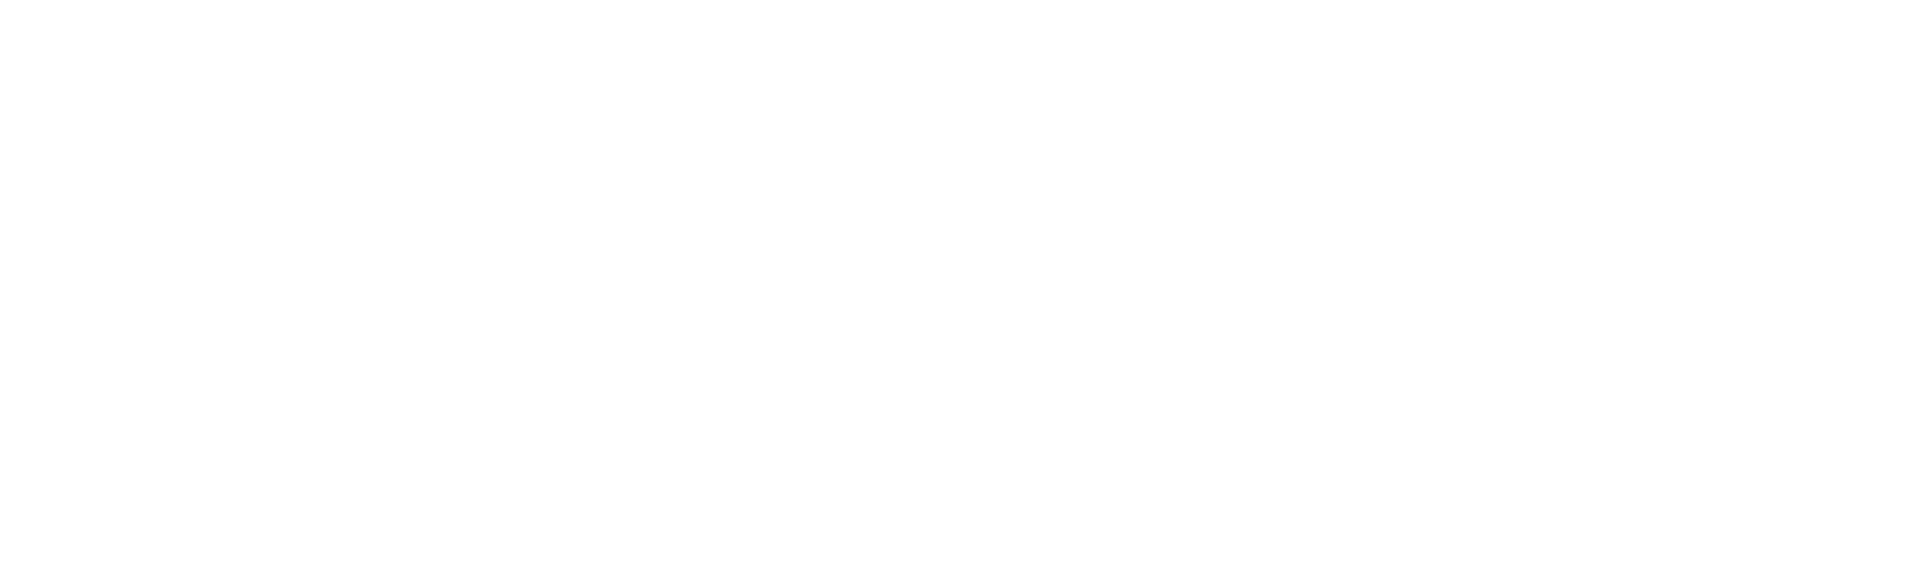 38374465_Ota-Ade-Oni-Consulting-LLC_Finished (1)